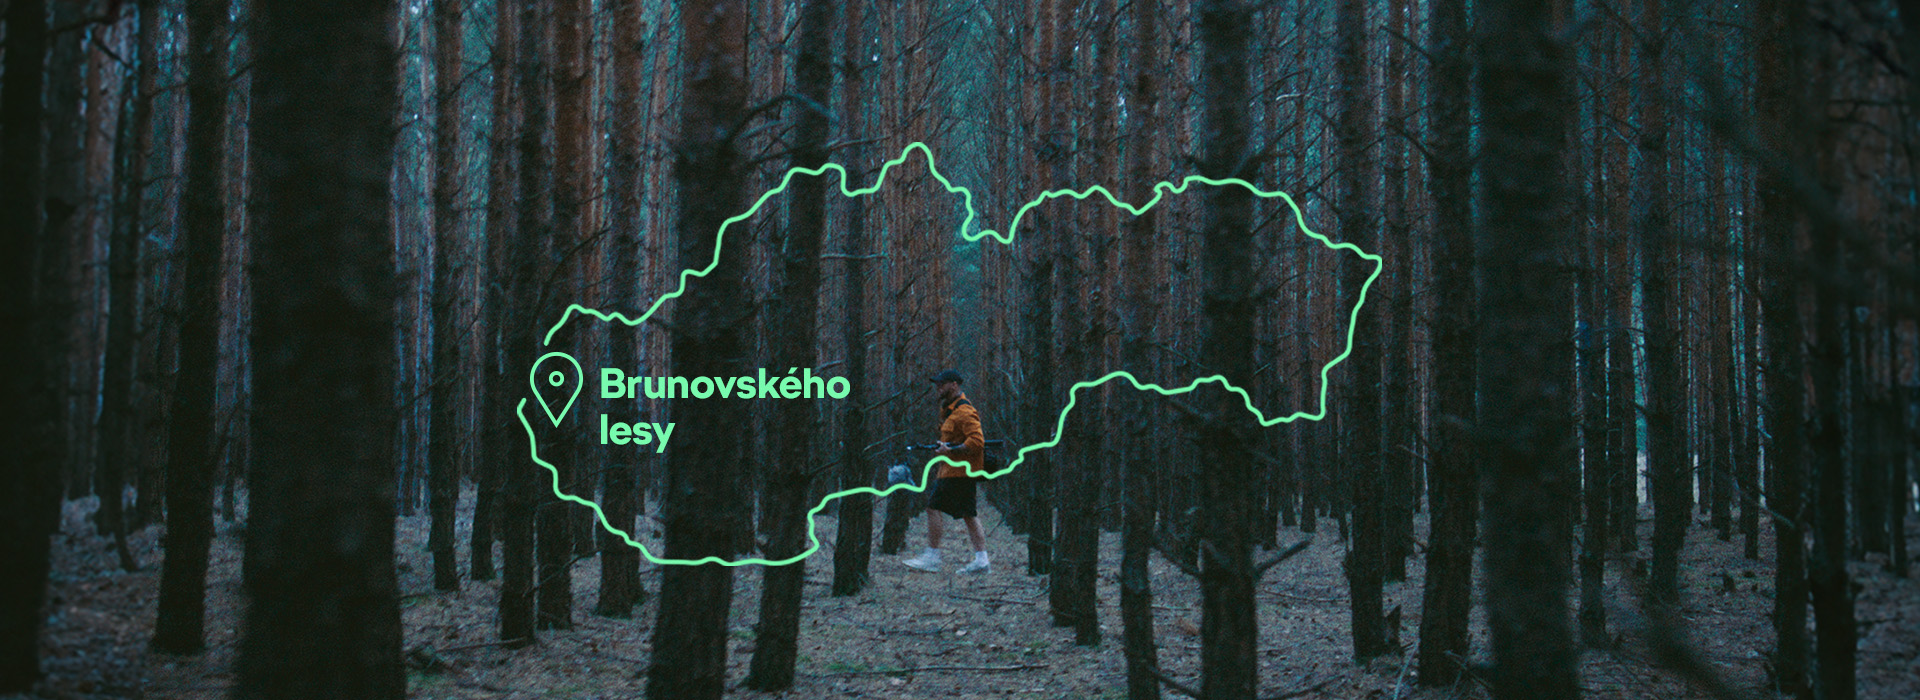 Brunovského lesy, Lozorno